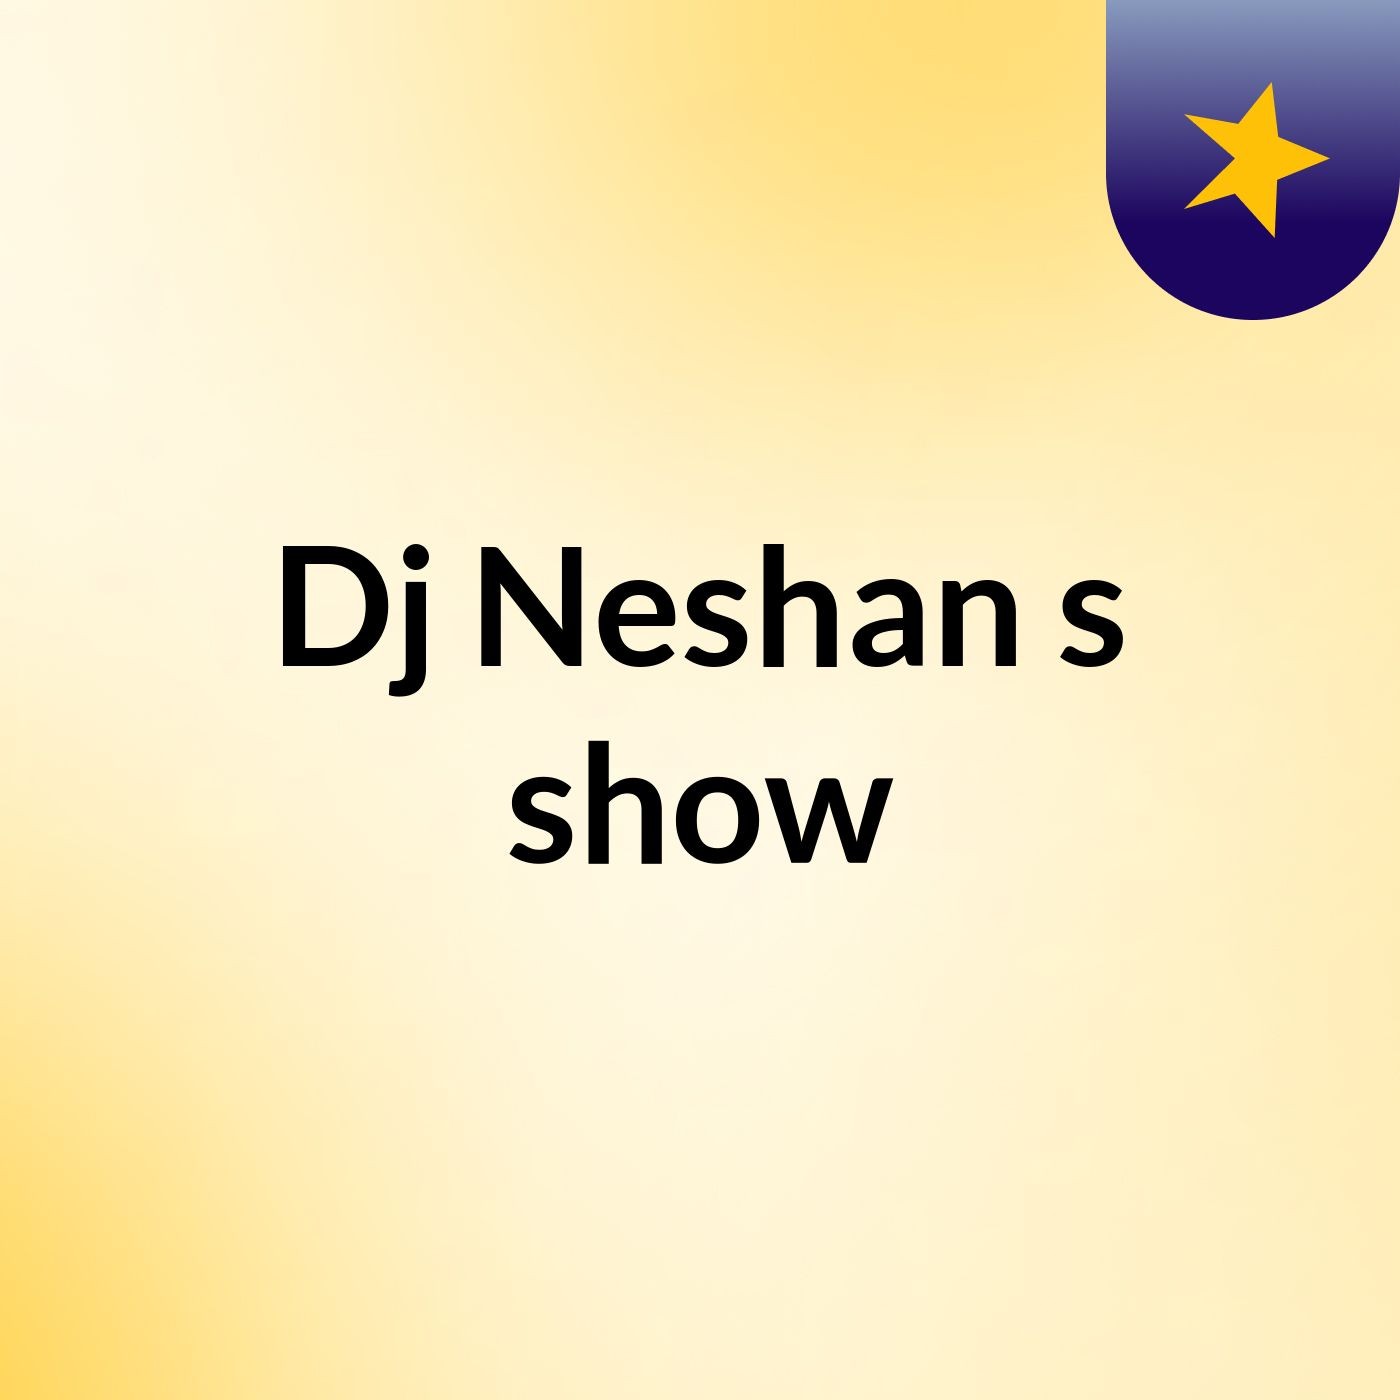 Dj Neshan's show